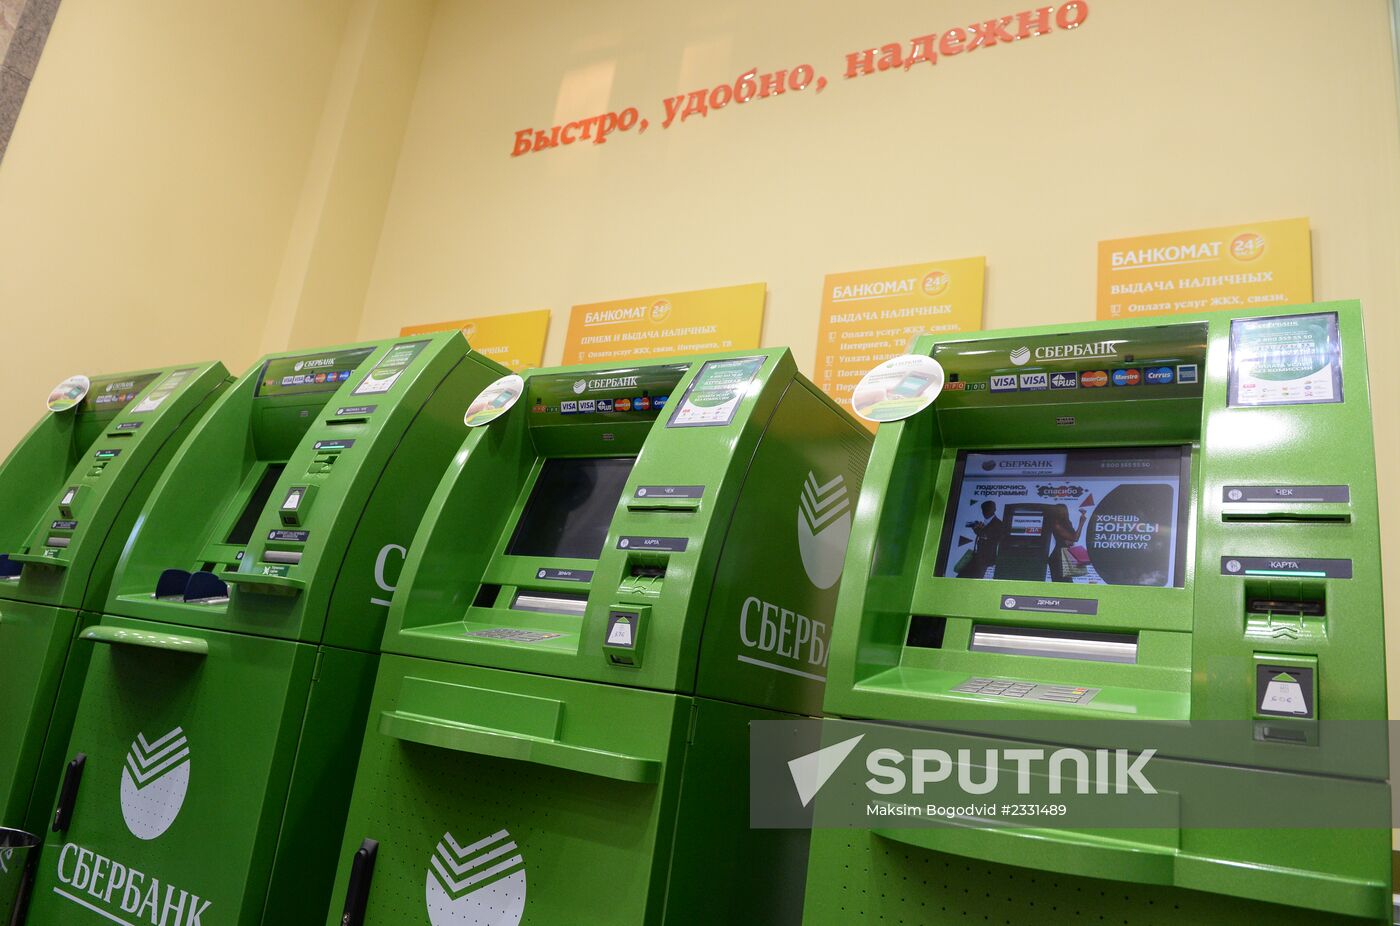 Sberbank's flagship office opens in Tatarstan